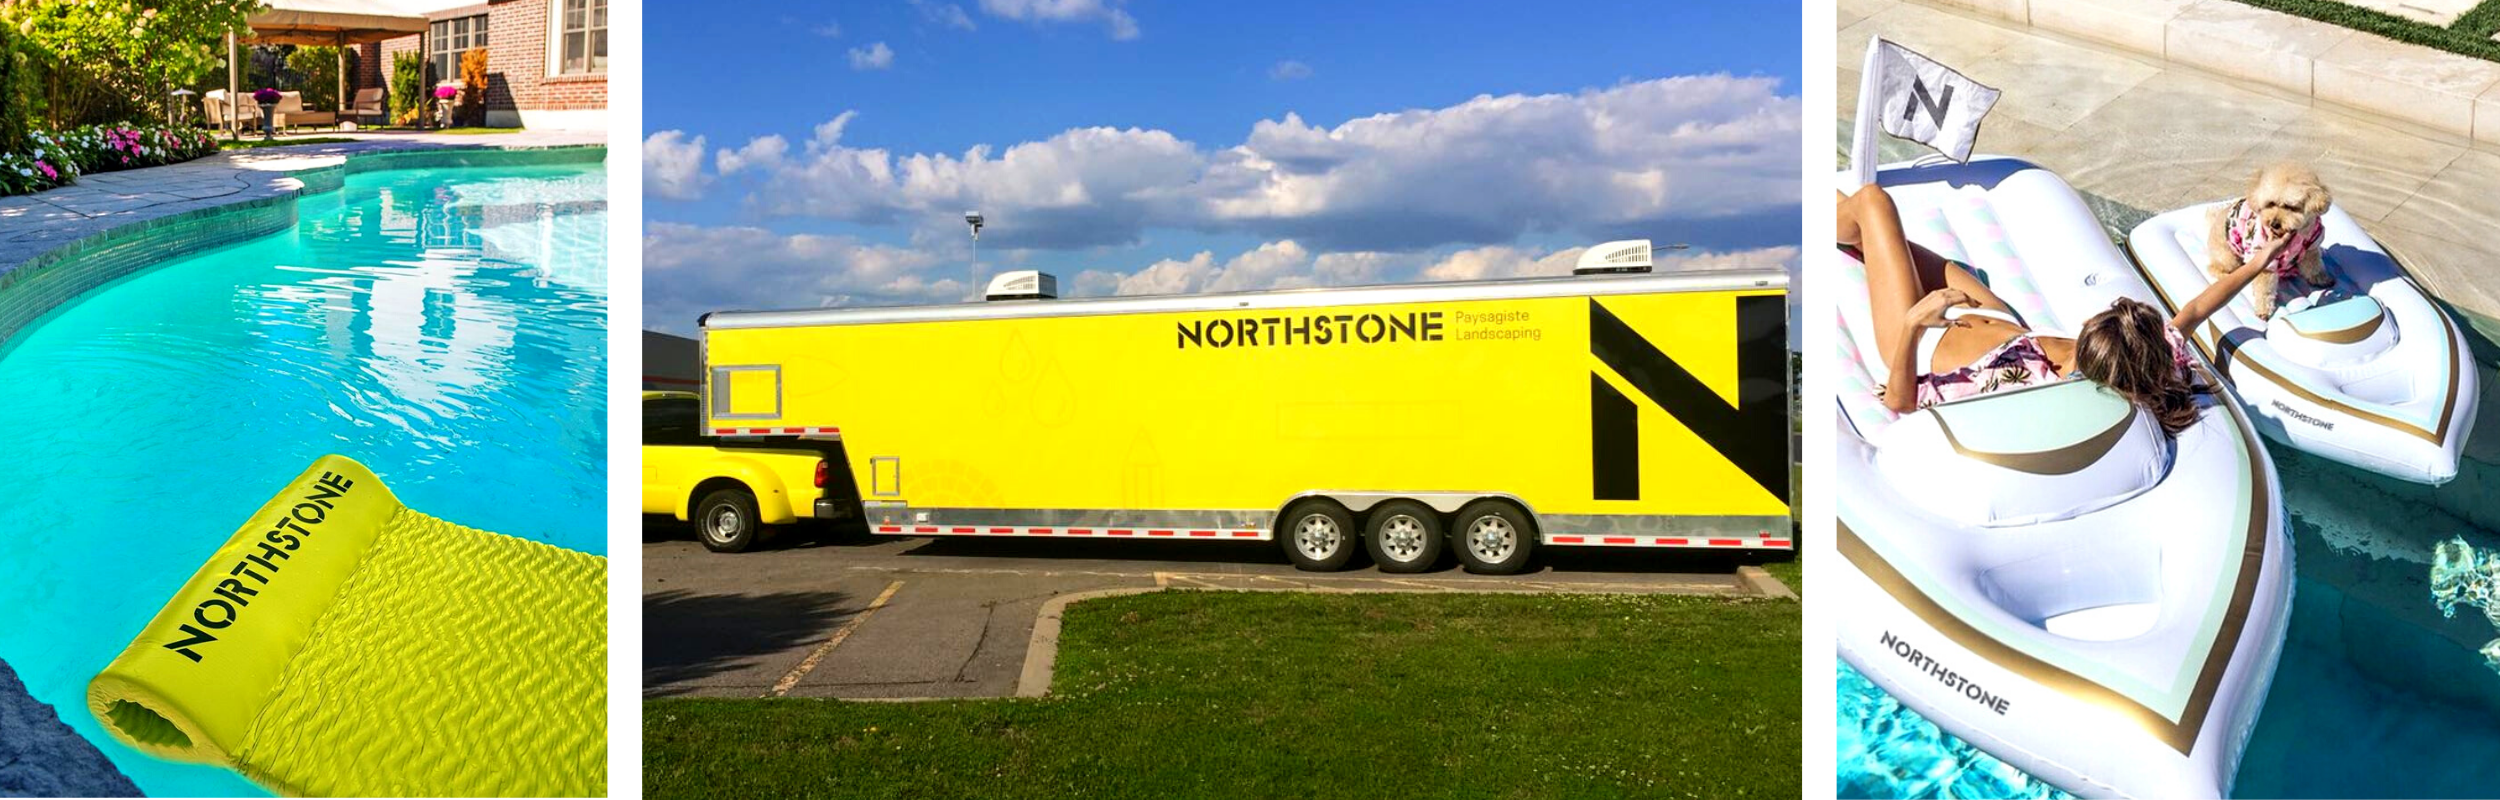 Northstone Brand